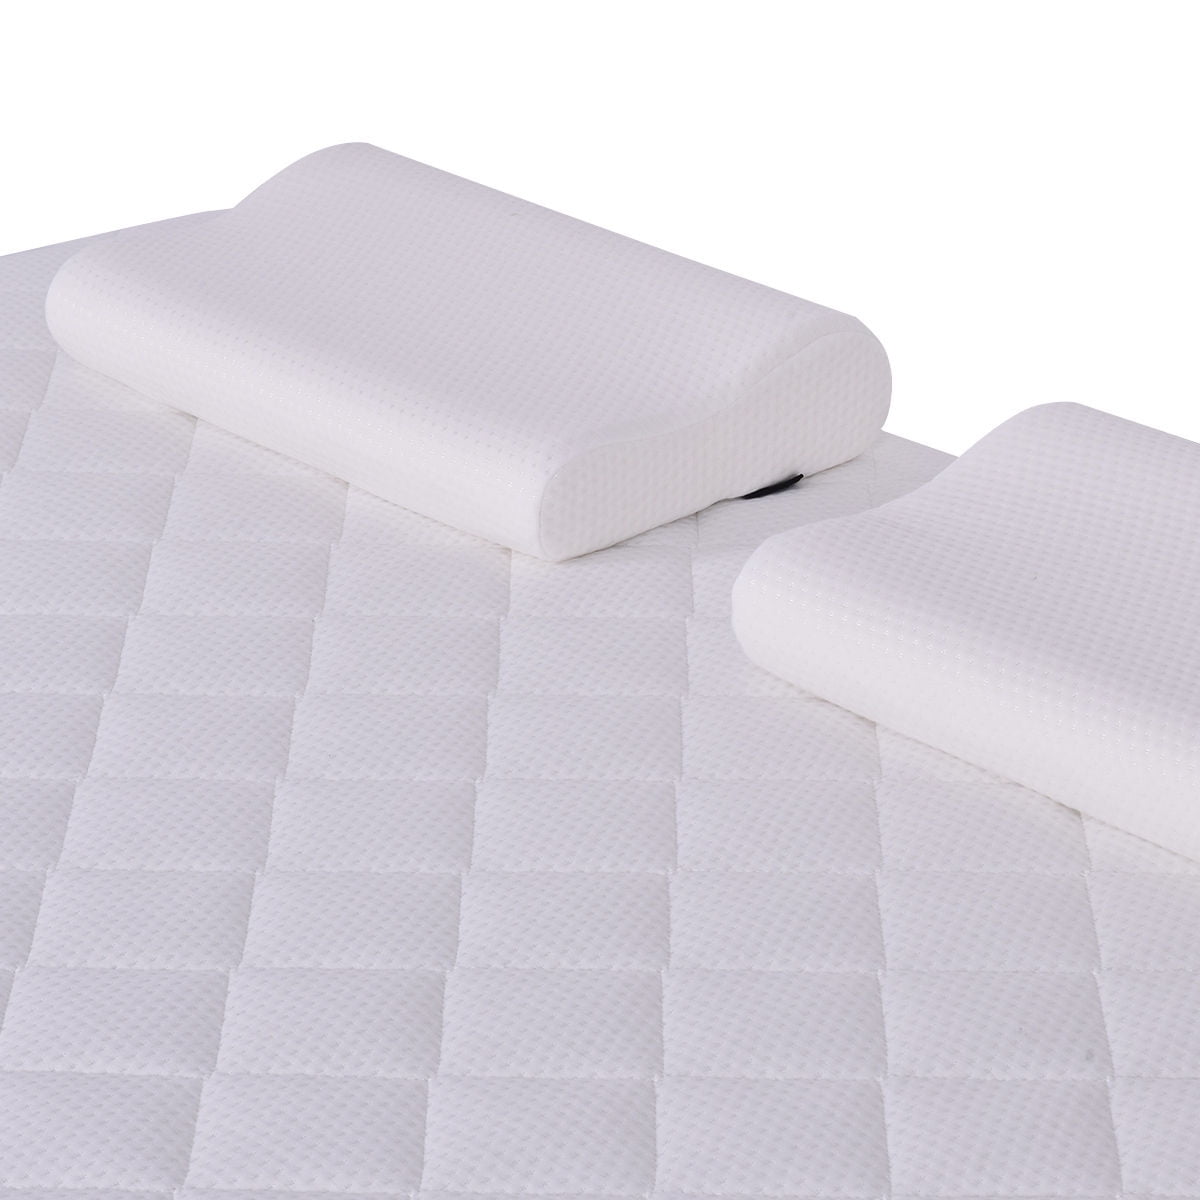 Queen Size 10" Memory Foam Mattress  Pad Bed Topper 2 FREE Pillows